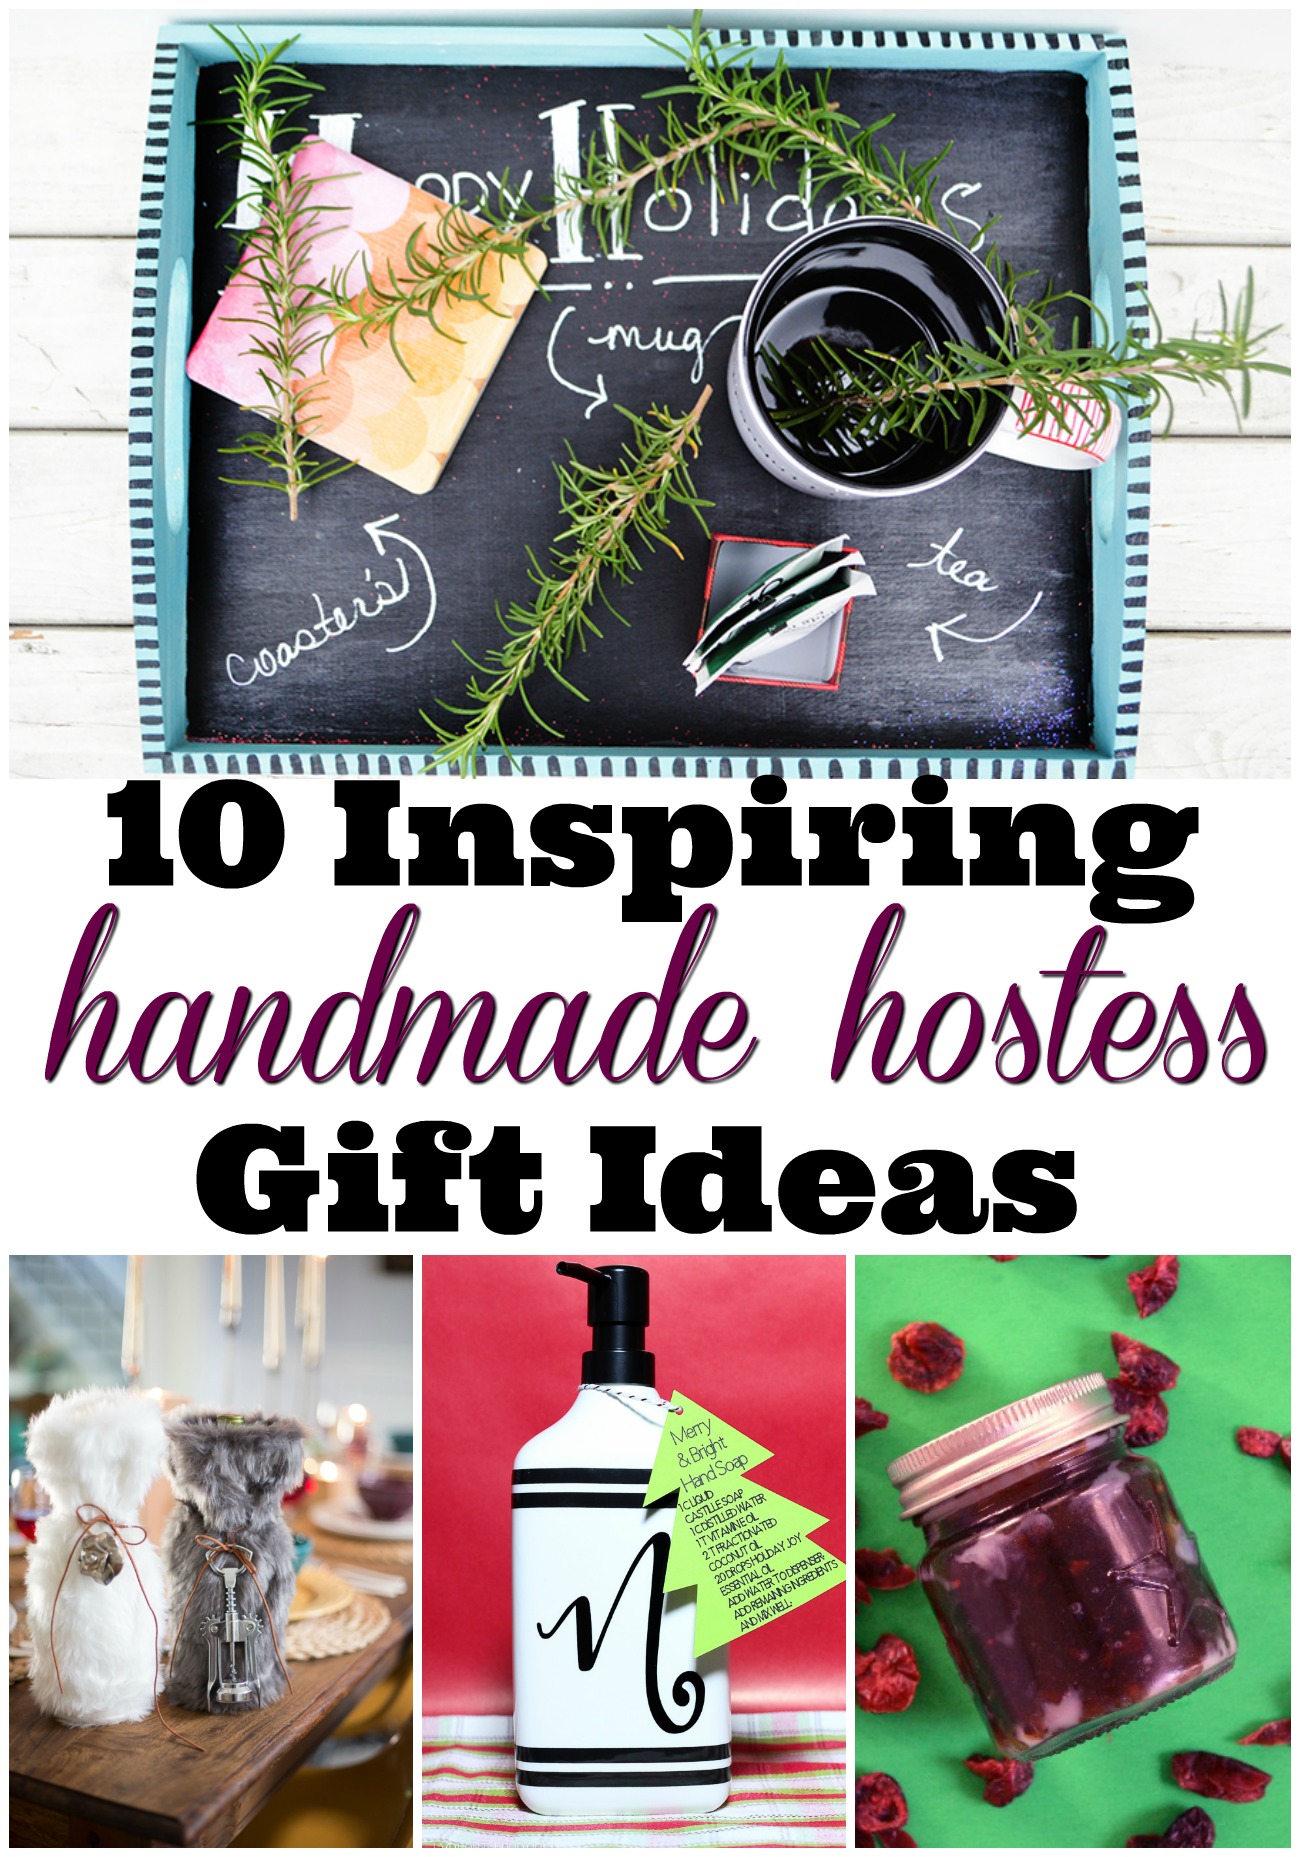 10 inspiring handmade hostess gift ideas #hostessgifts #giftideas #diygifts via @resincraftsblog